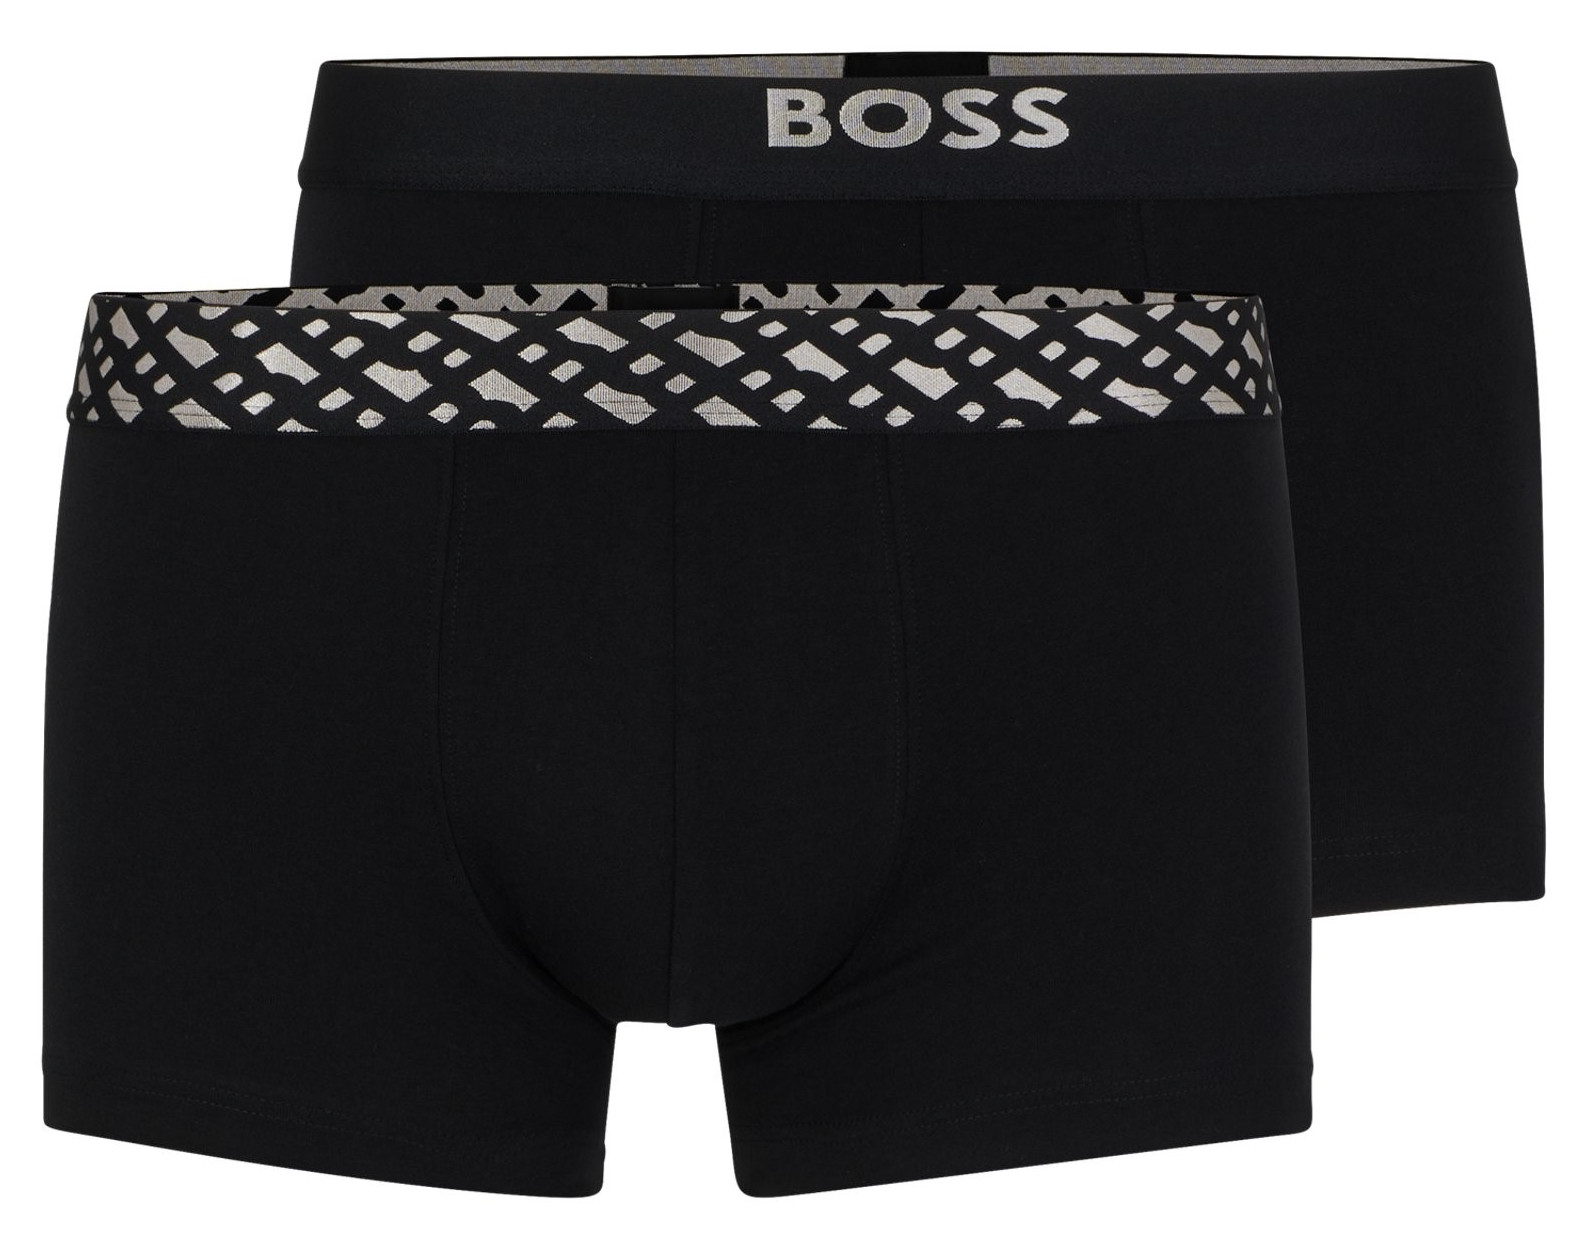 Hugo Boss 2 PACK - pánské boxerky BOSS 50499823-001 L